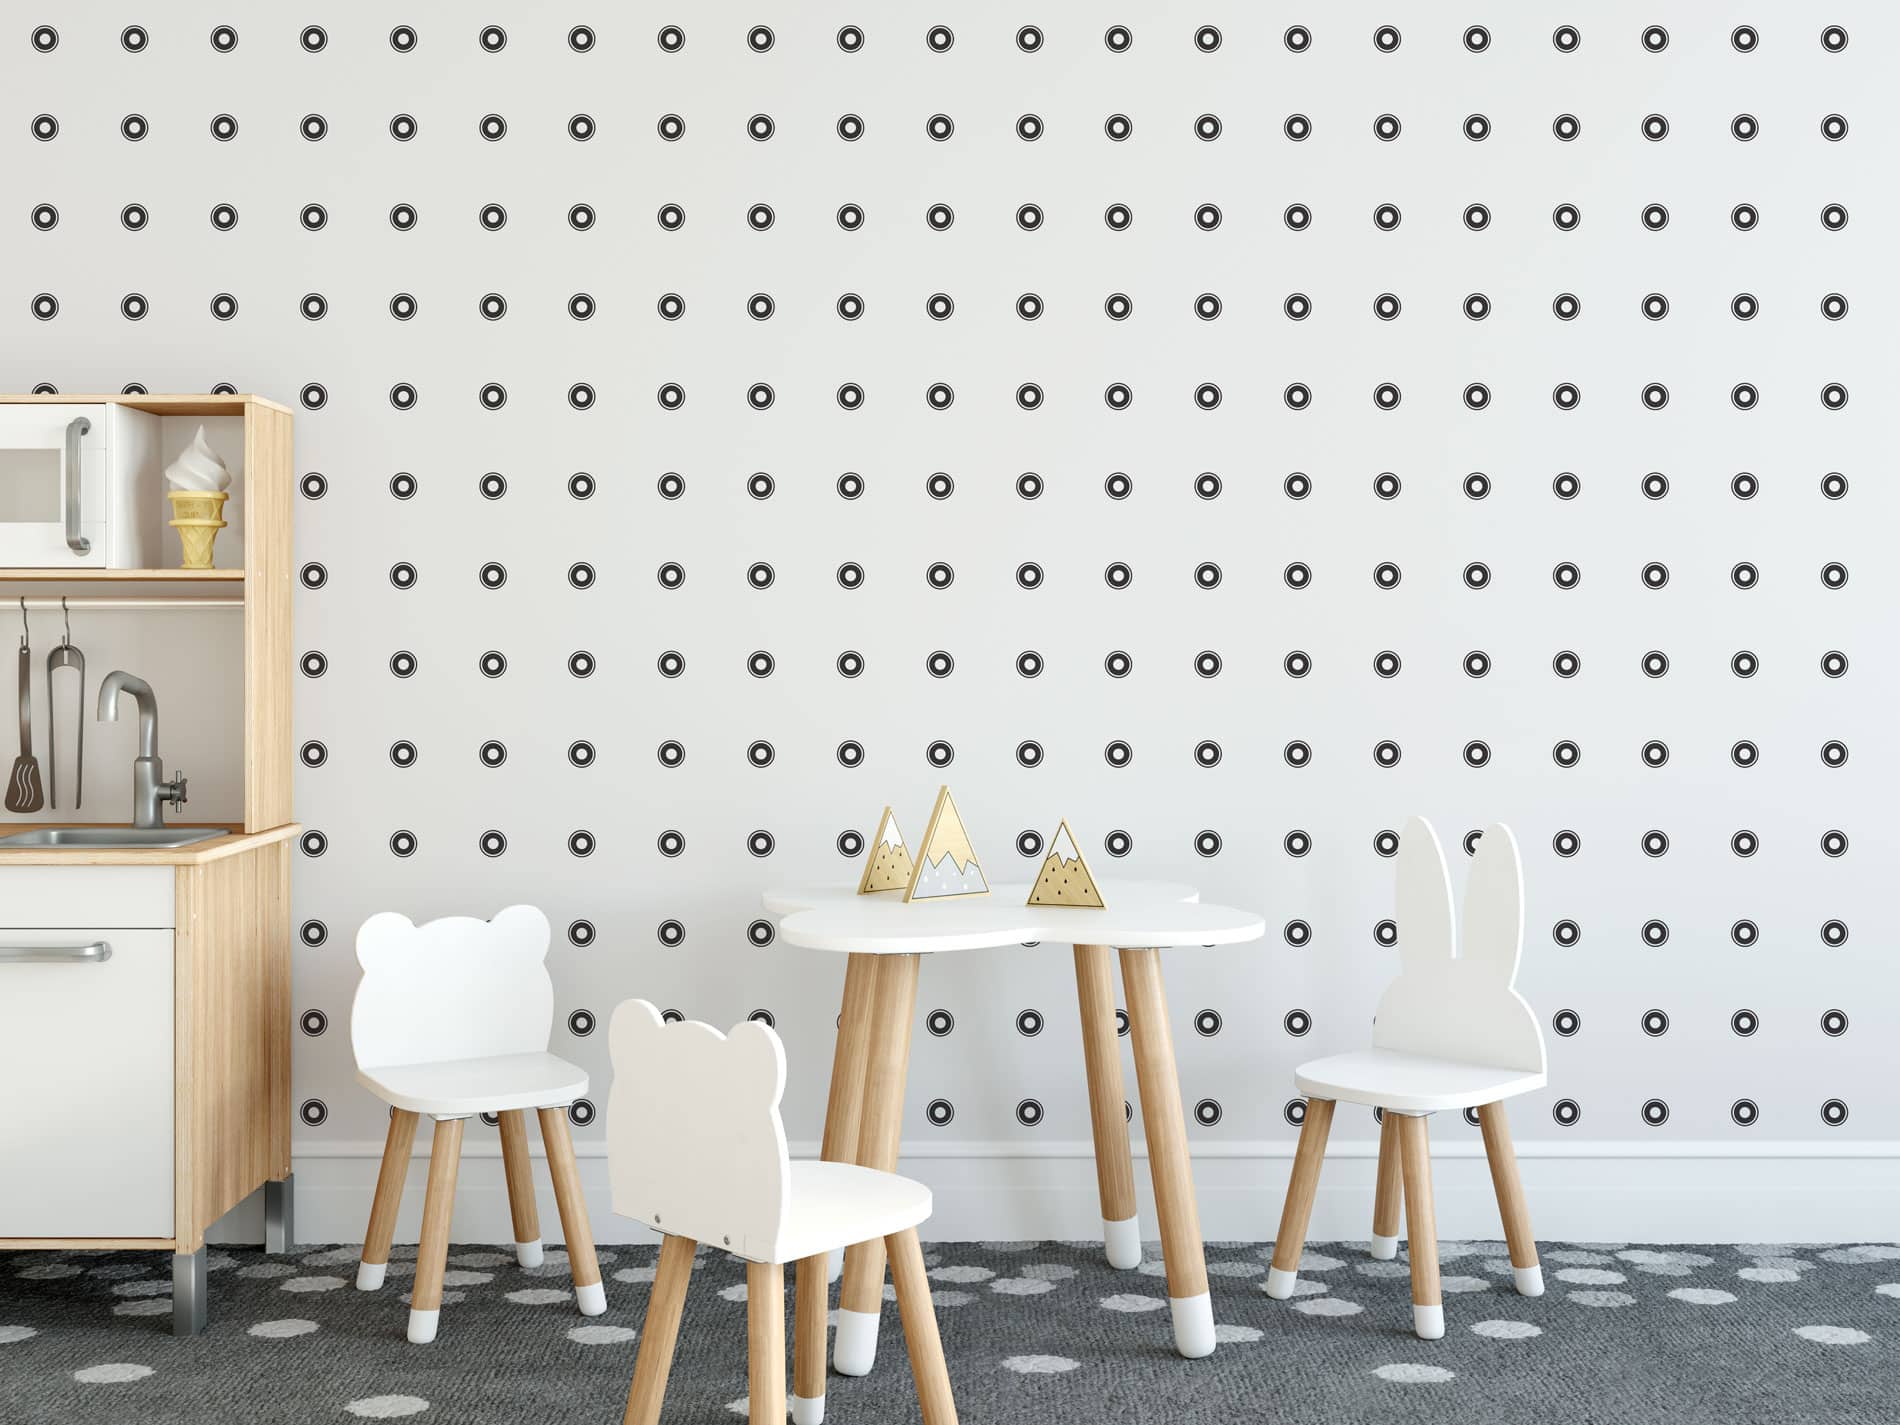 Modern polka dot temporary wallpaper